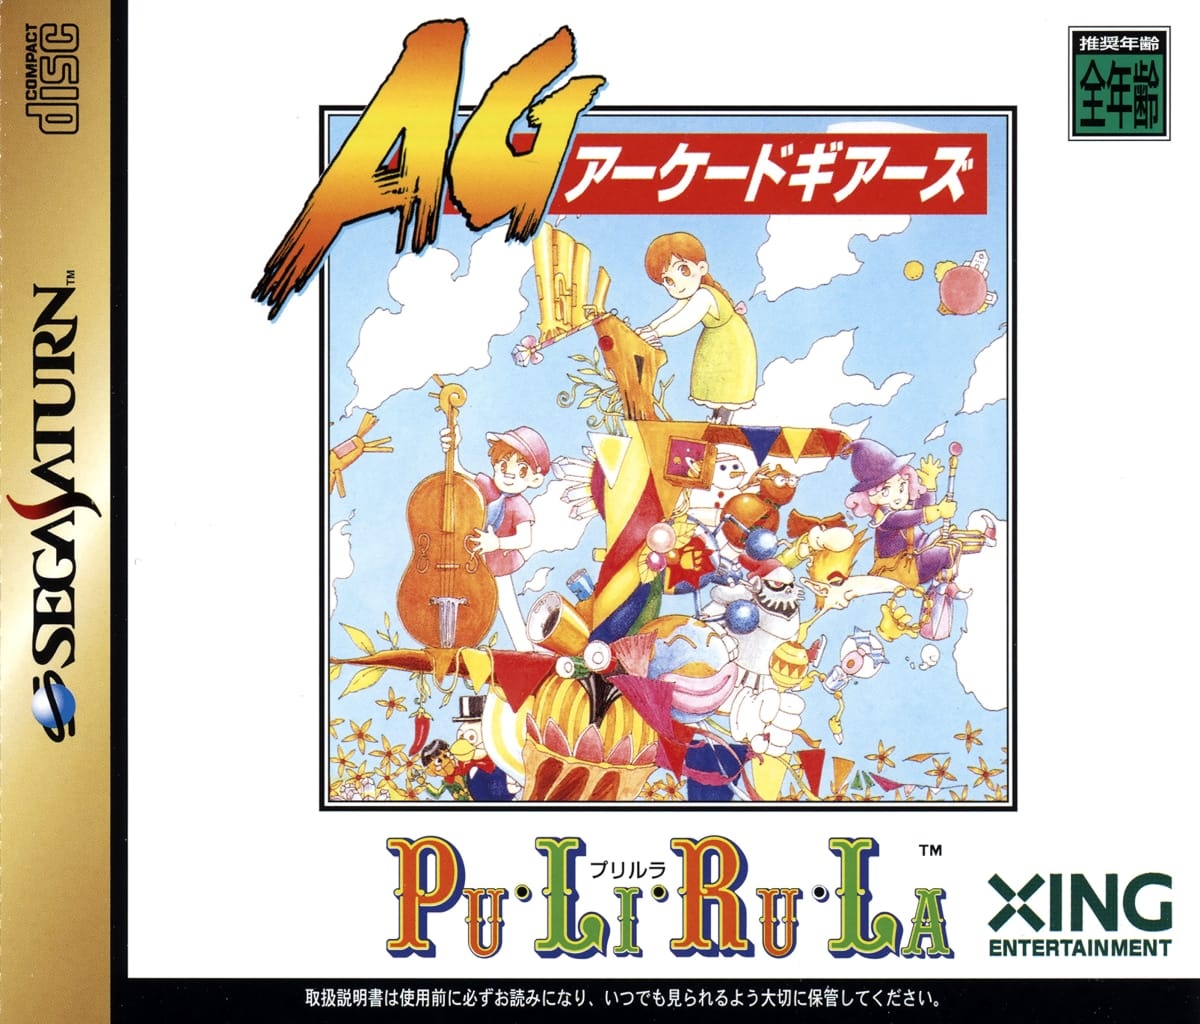 Capa do jogo Pu-Li-Ru-La/Arcade Gears